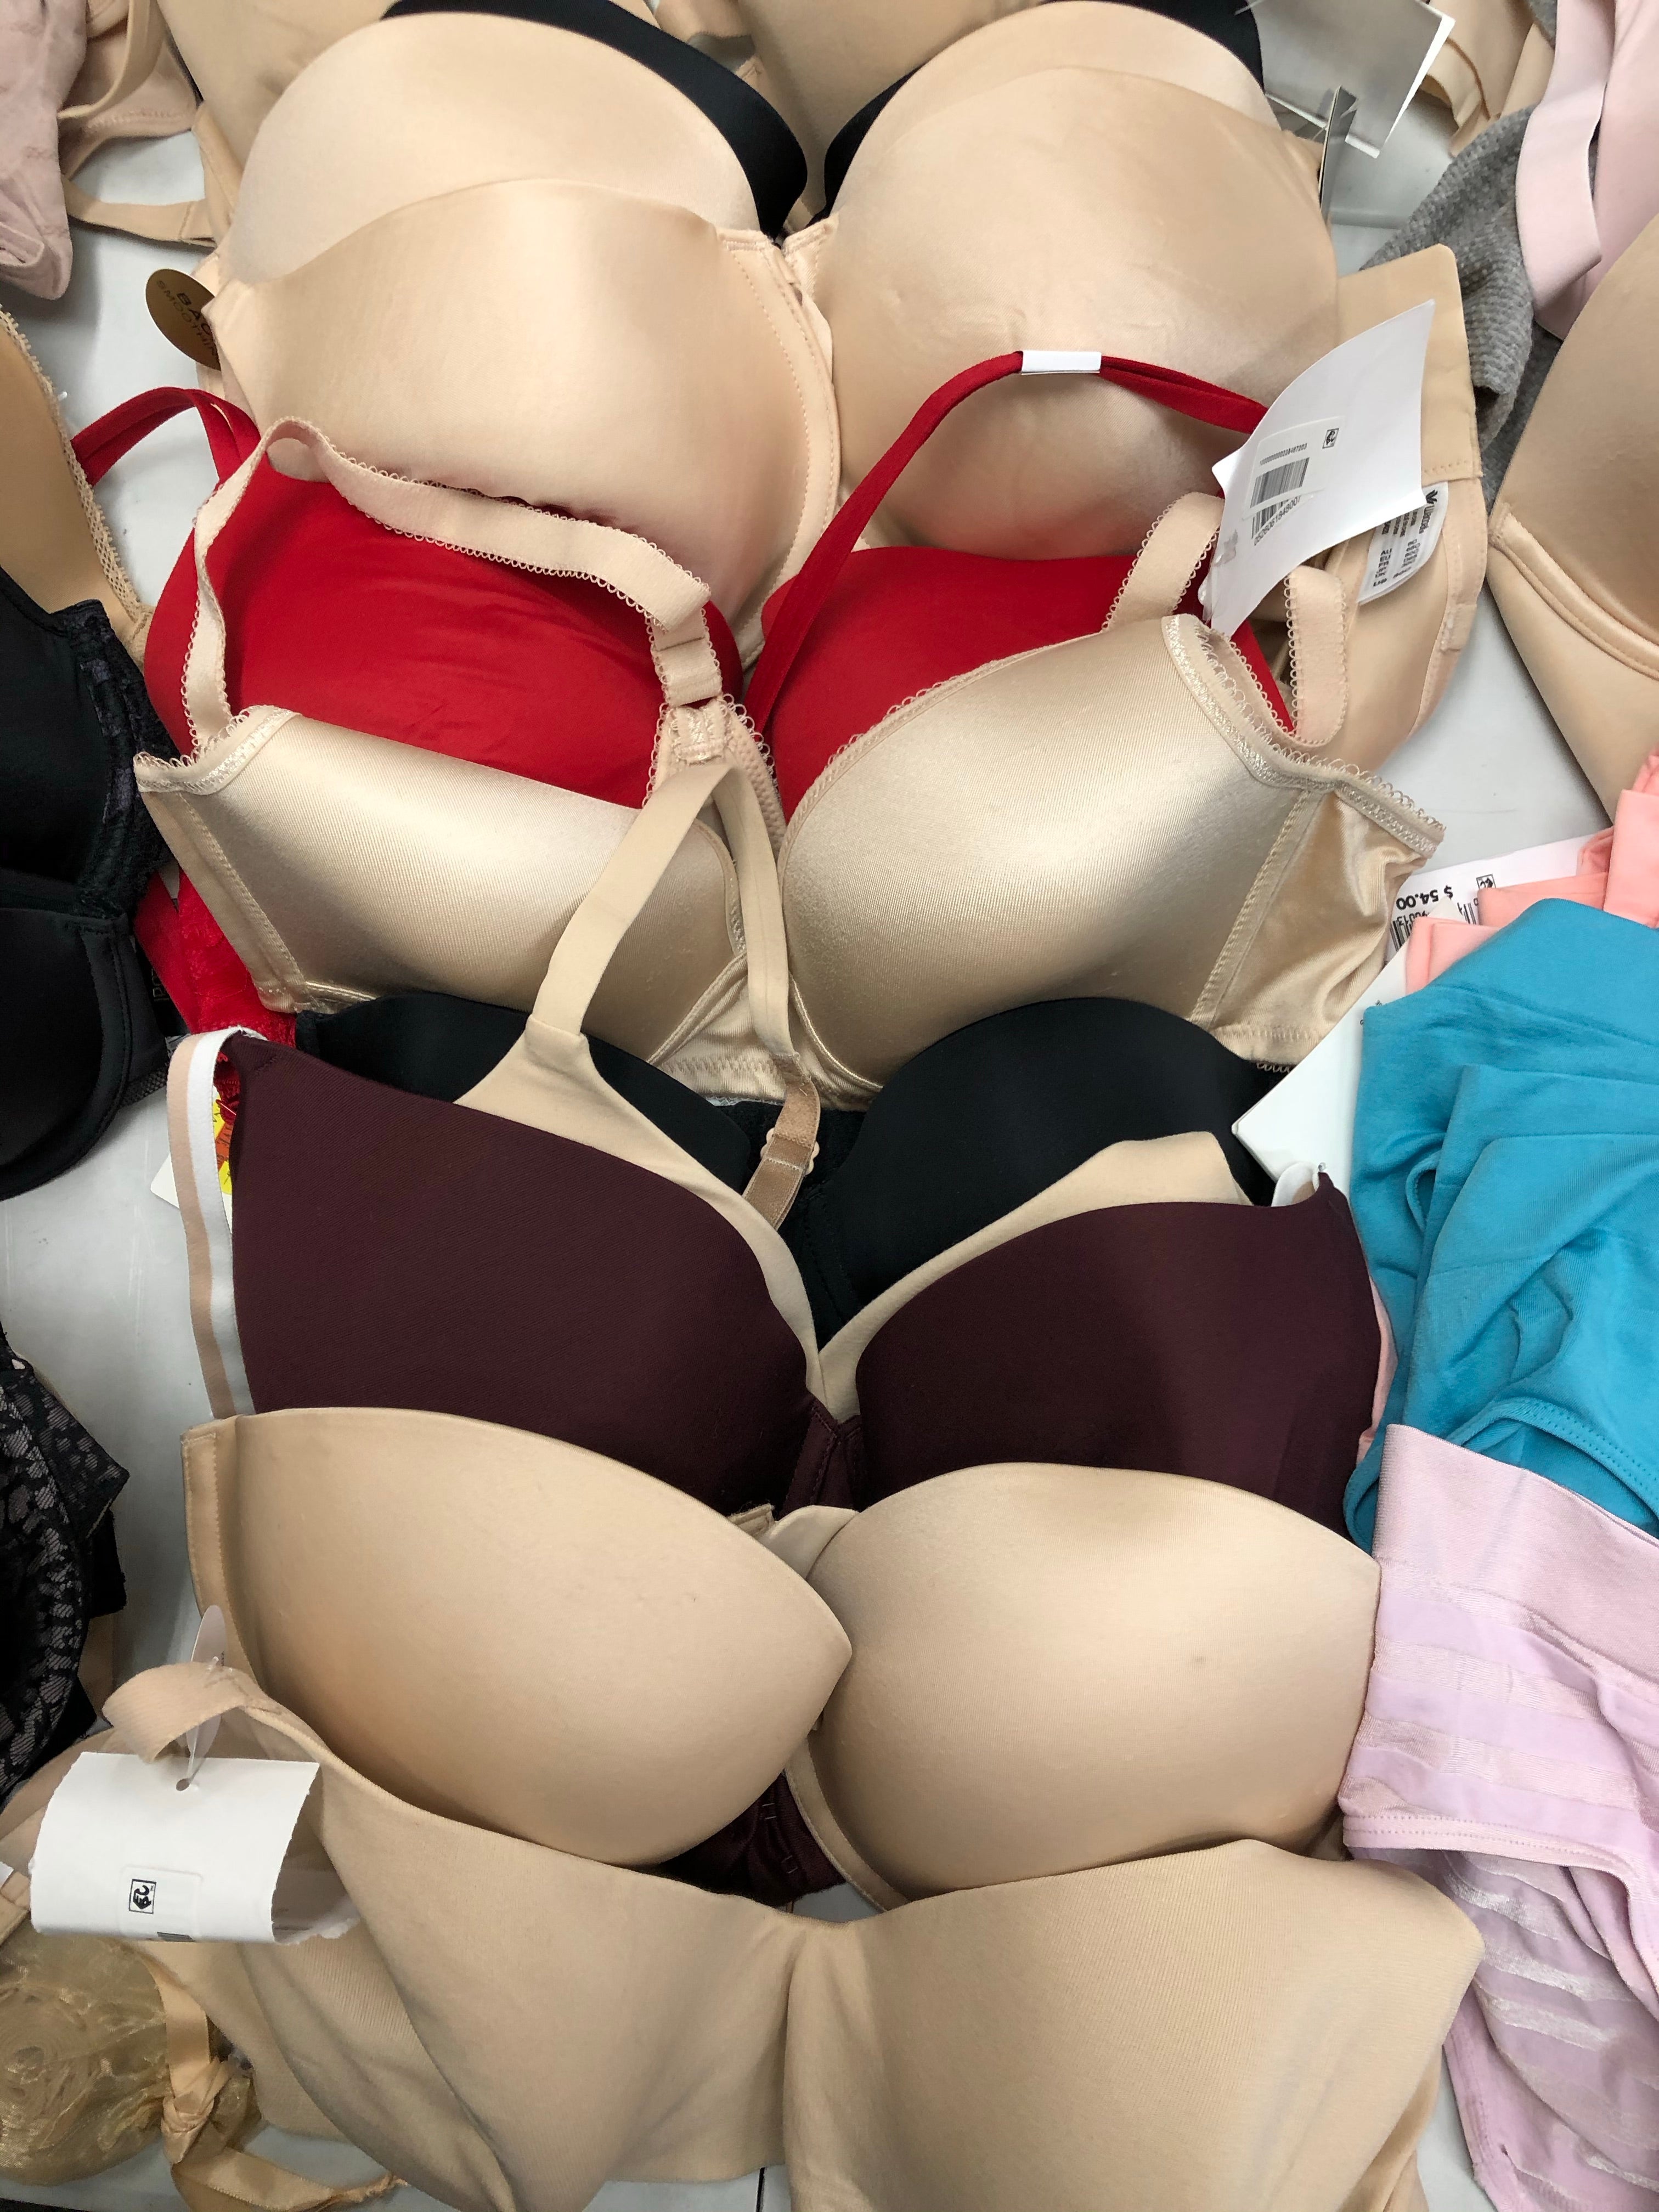 Women's Clothing INTIMATES Wholesale Lot, CALVIN KLEIN, DKNY